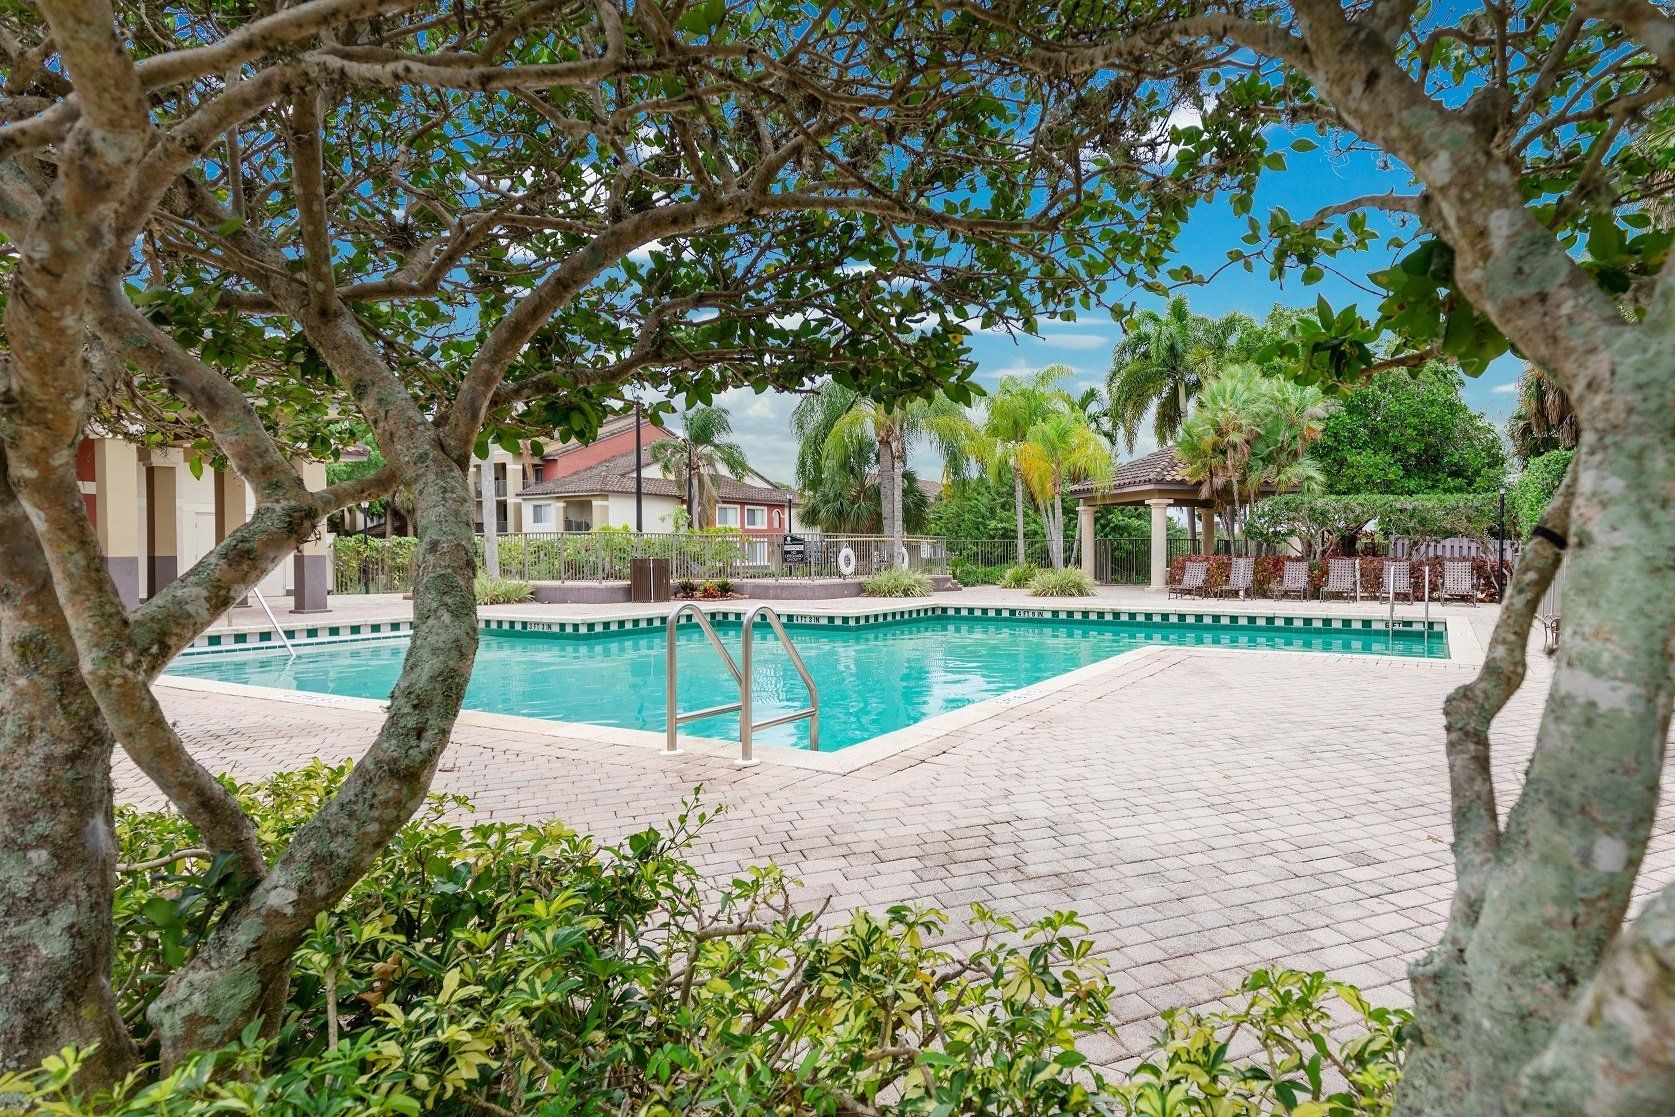 American Landmark pays $61M for North Lauderdale rental community